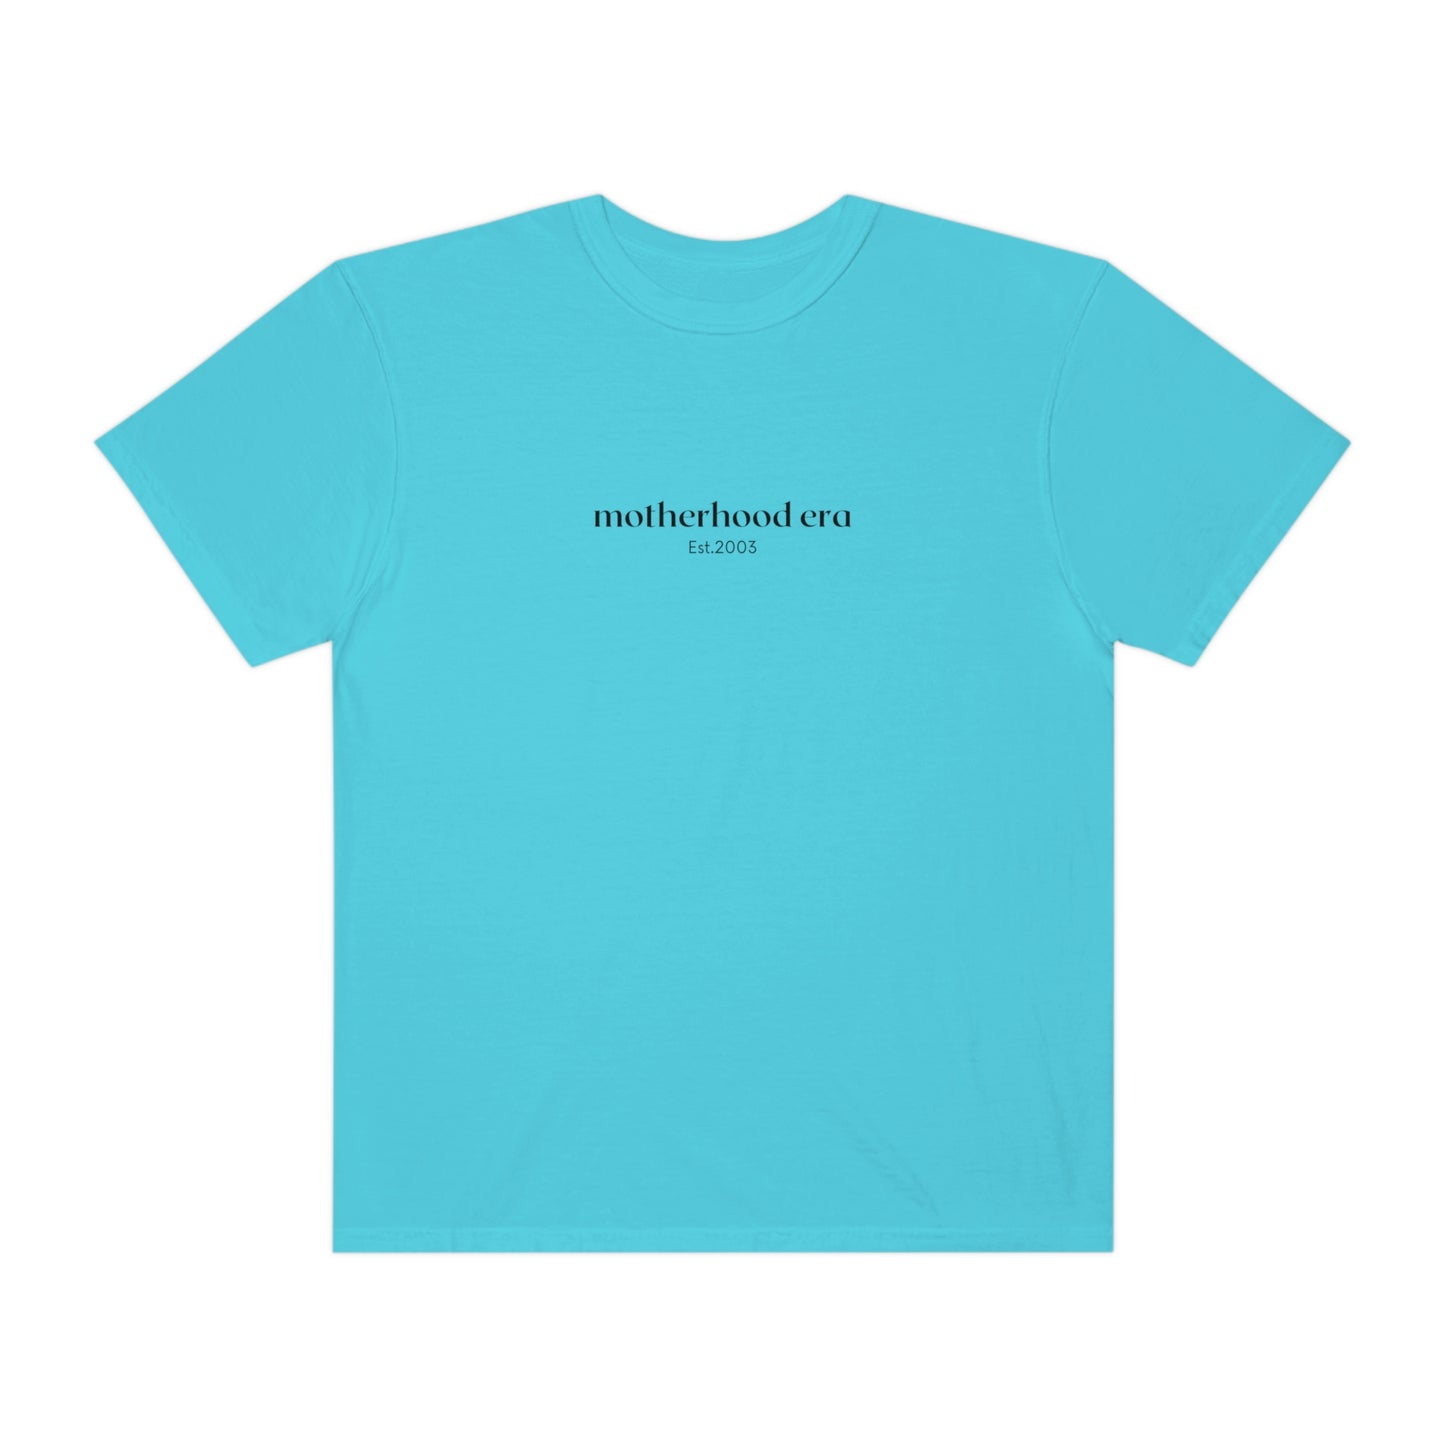 Est. 2003 Motherhood Era Oversized Unisex T-shirt